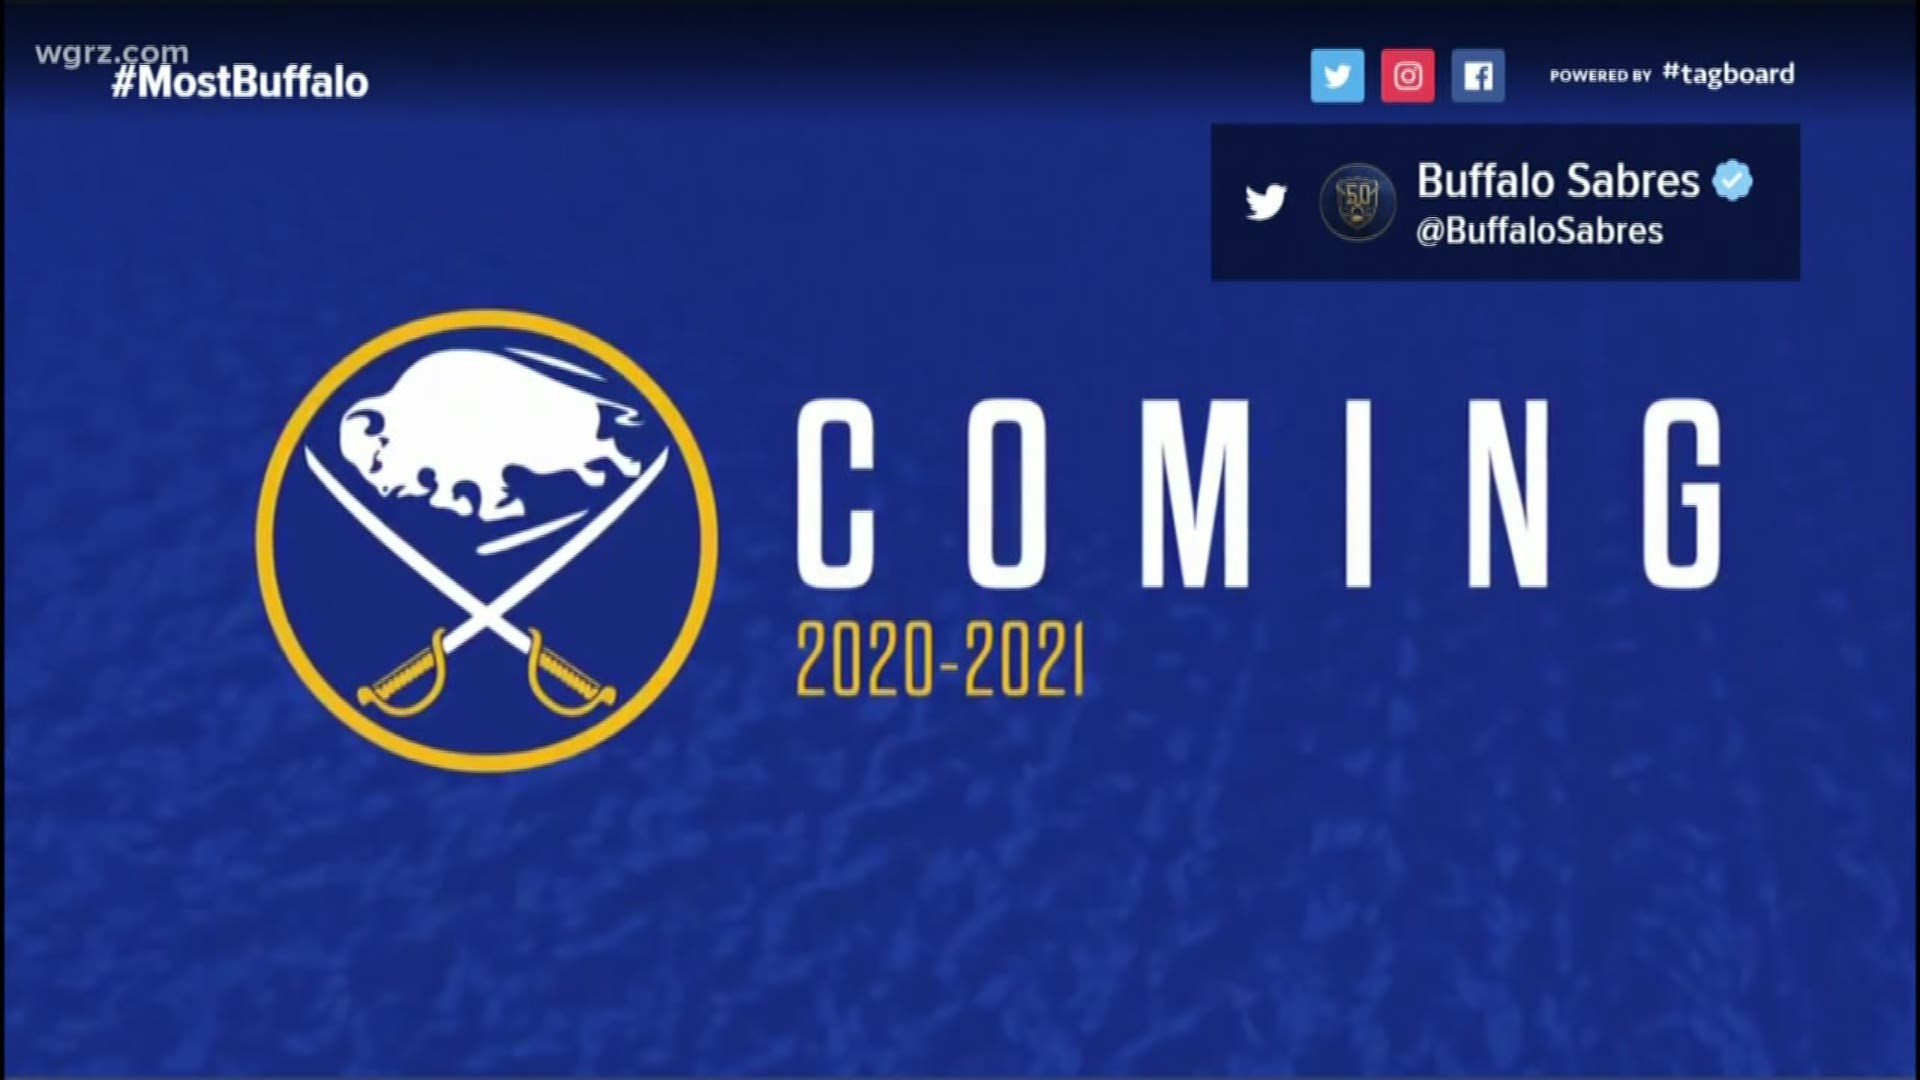 Sabres making Jersey change for 2020-21 season